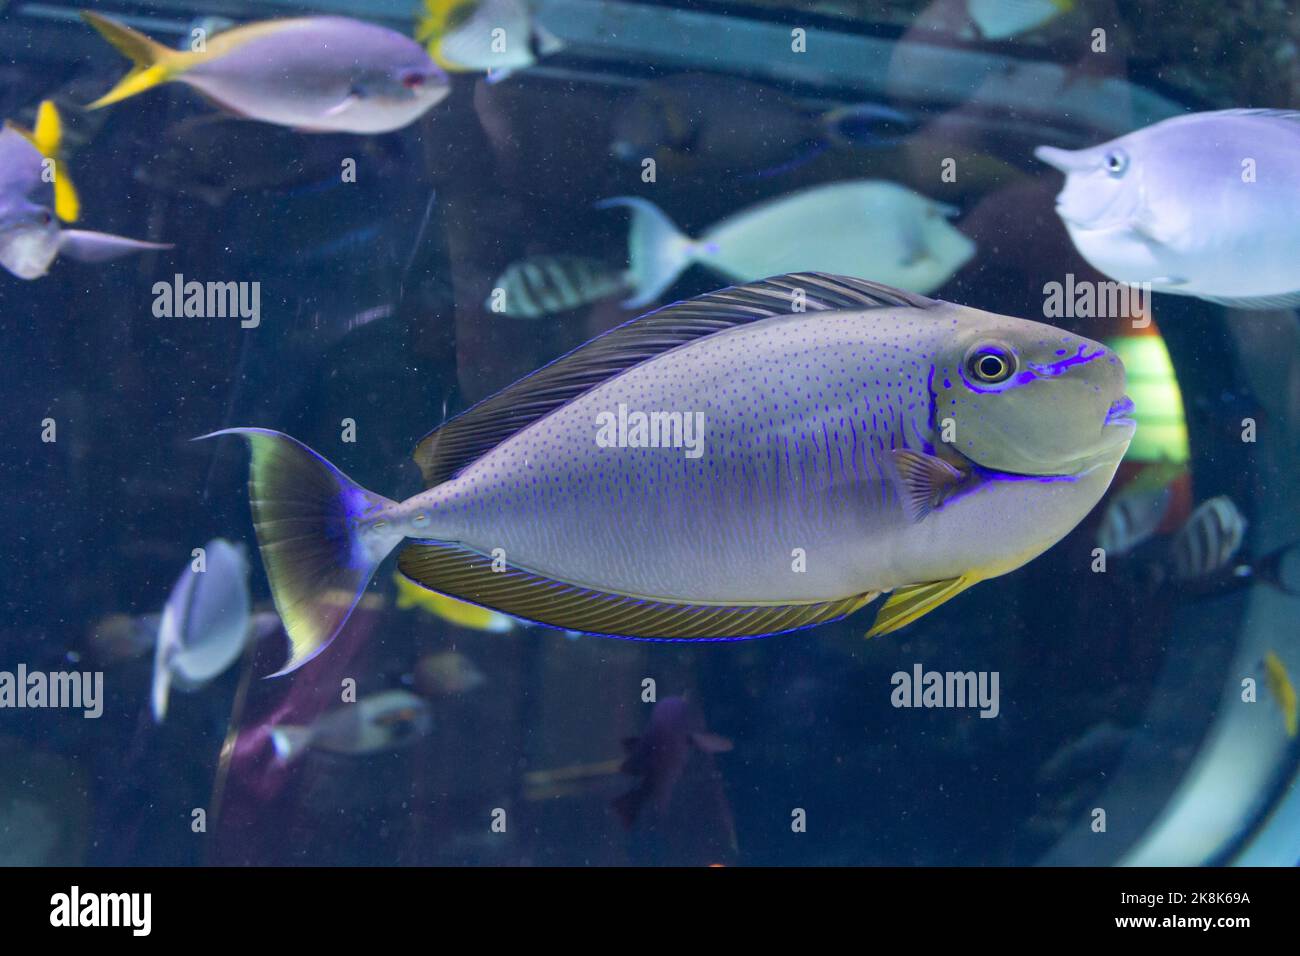 A close-up shot of Blue Parrot fish in an aquarium Stock Photo